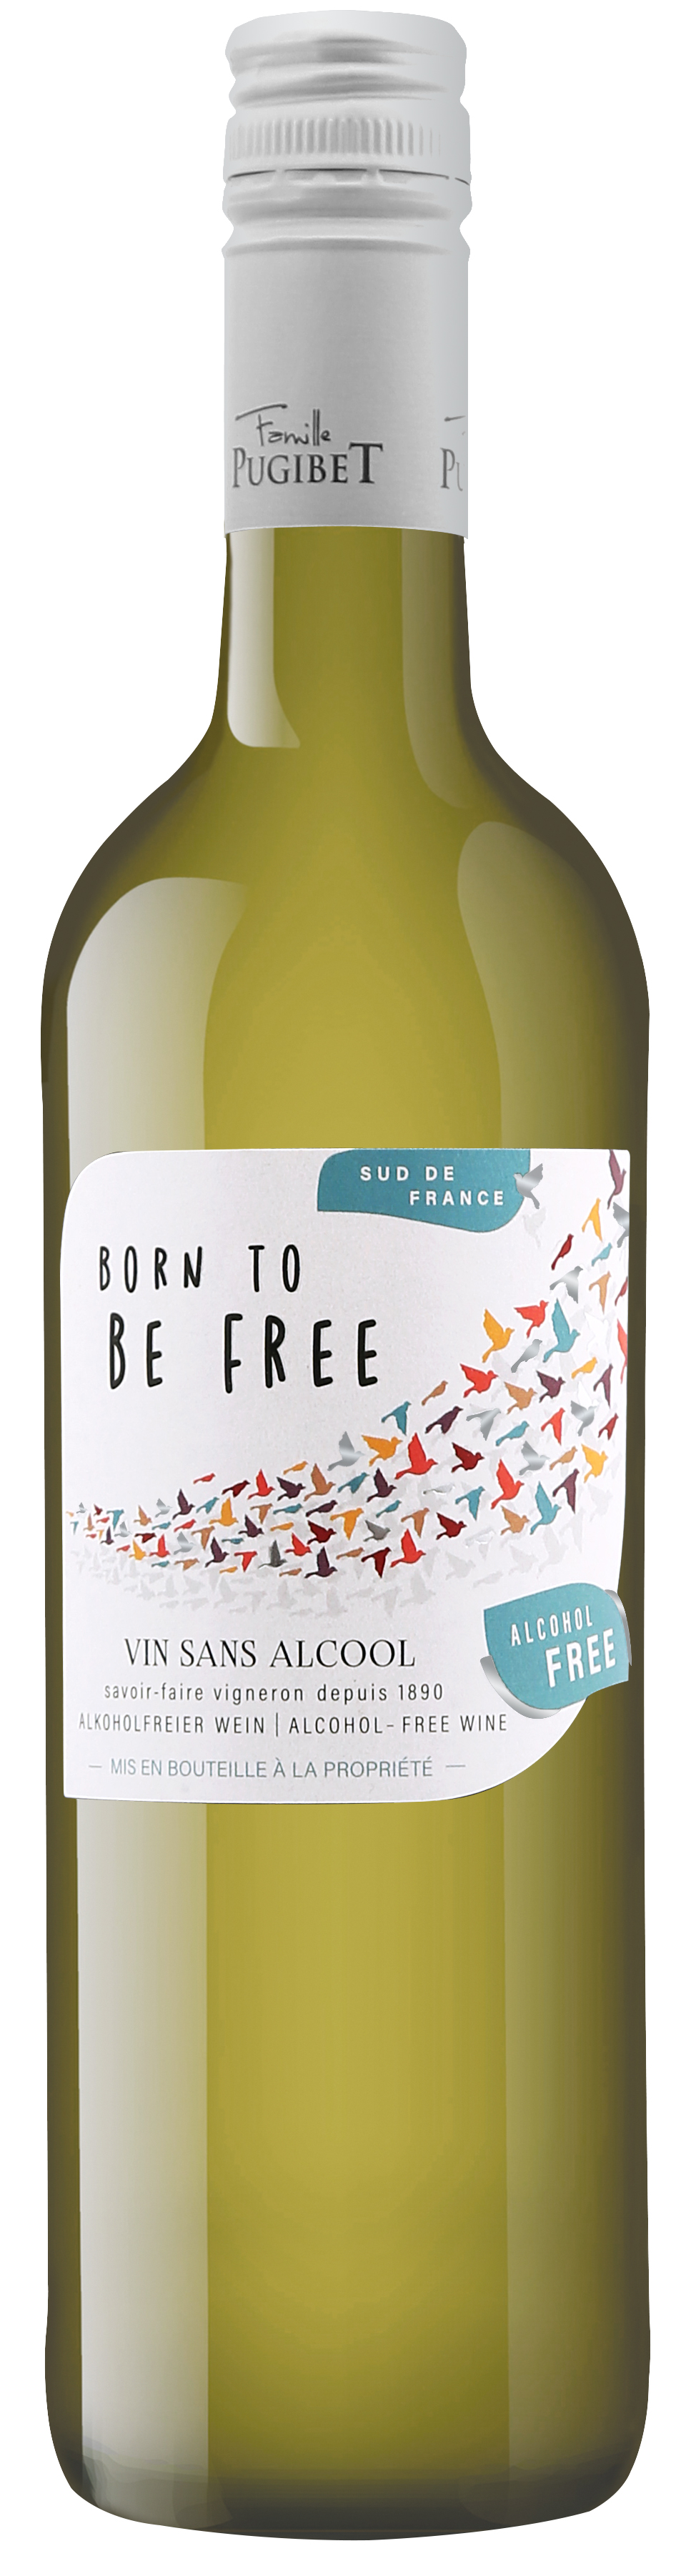 Born To Be Free 0% - Vin blanc sans alcool - Nicolas